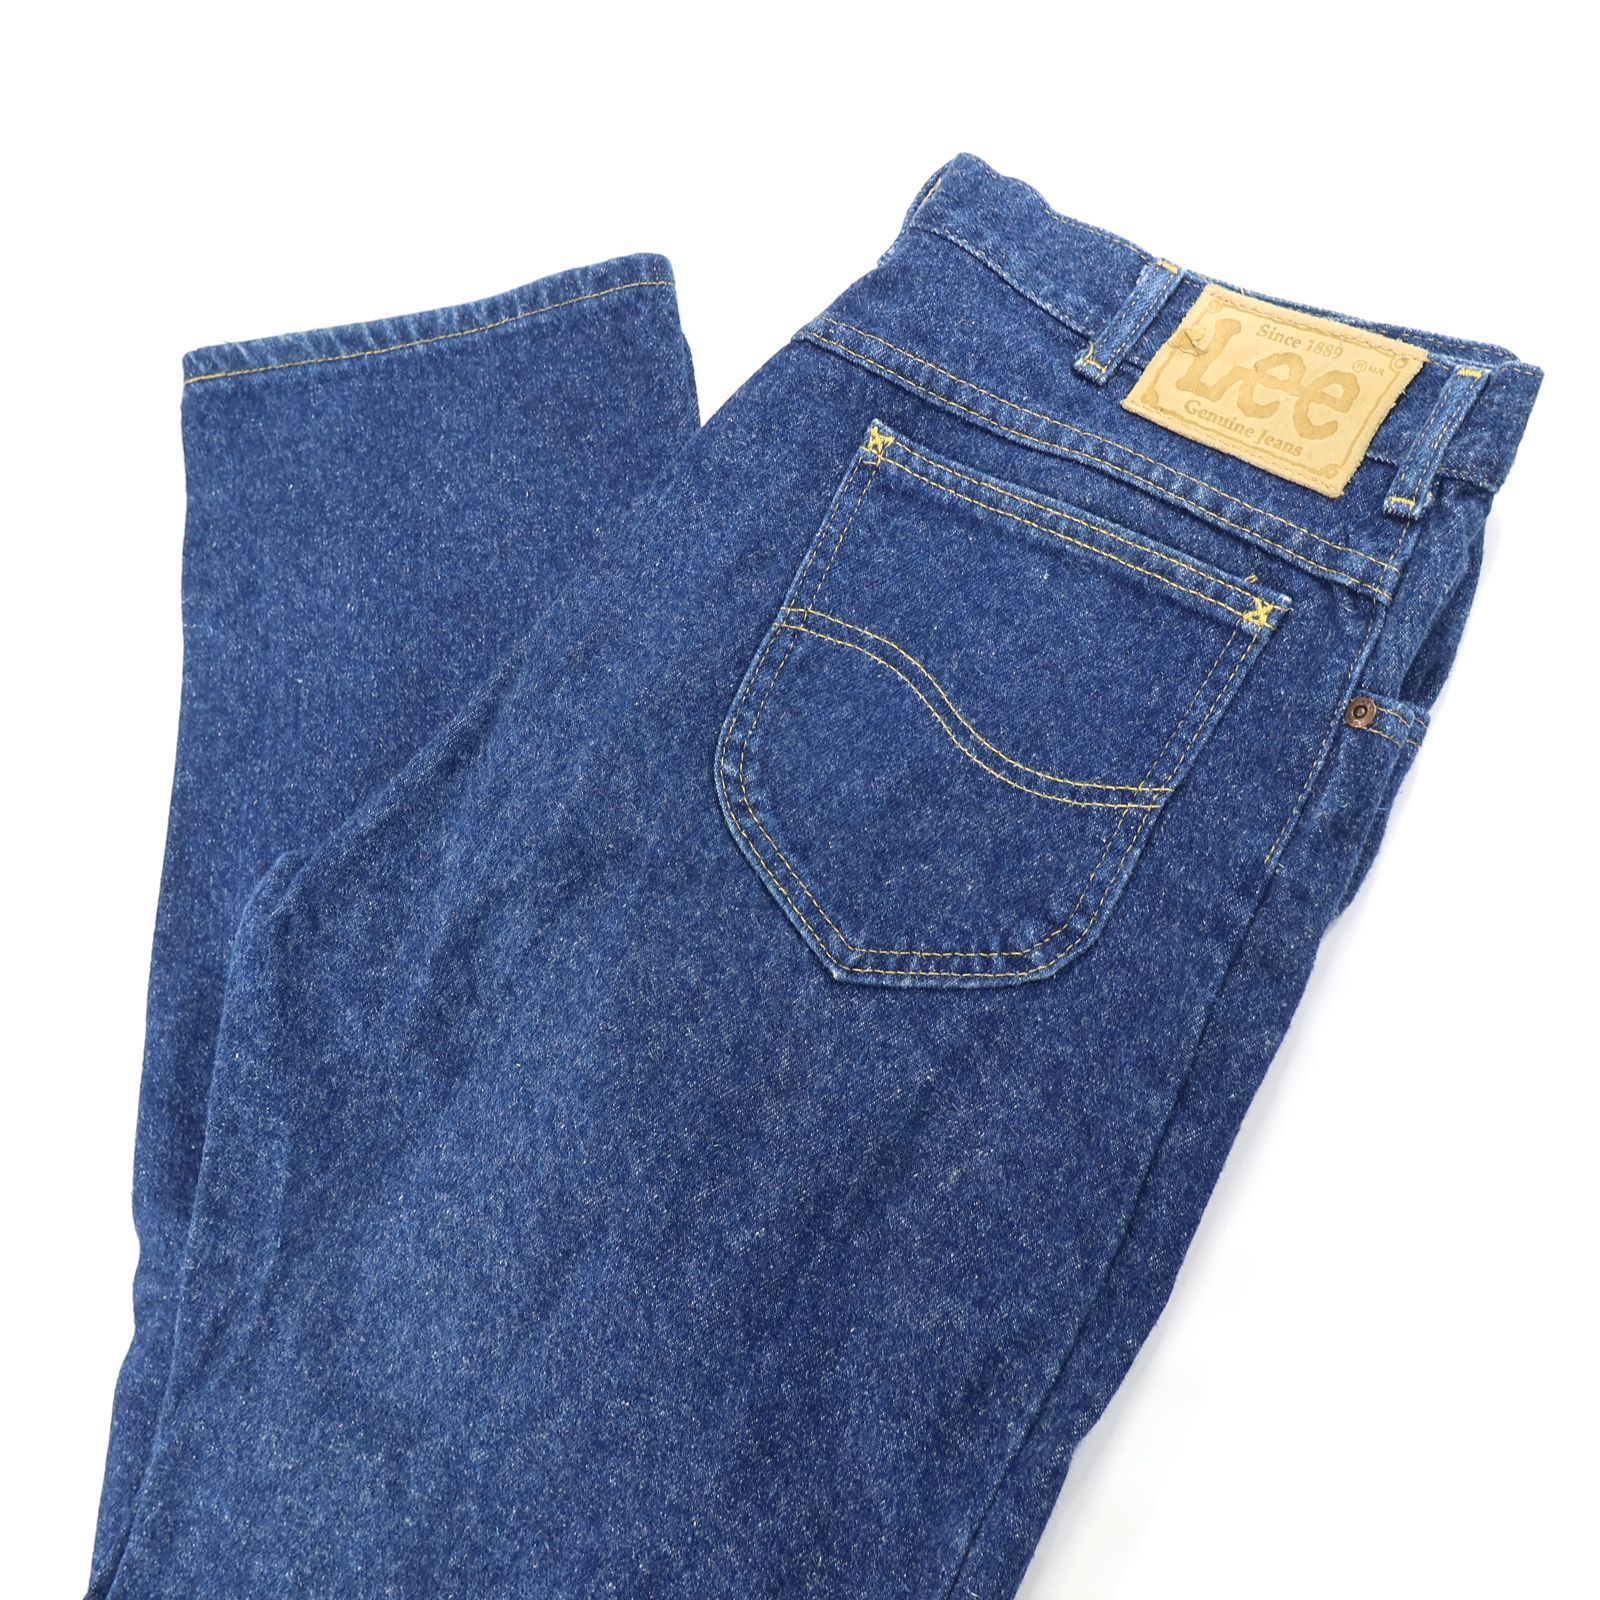 80s～ 希少☆Lee リー genuine jeans - 古着屋0413 残り17枚10%off